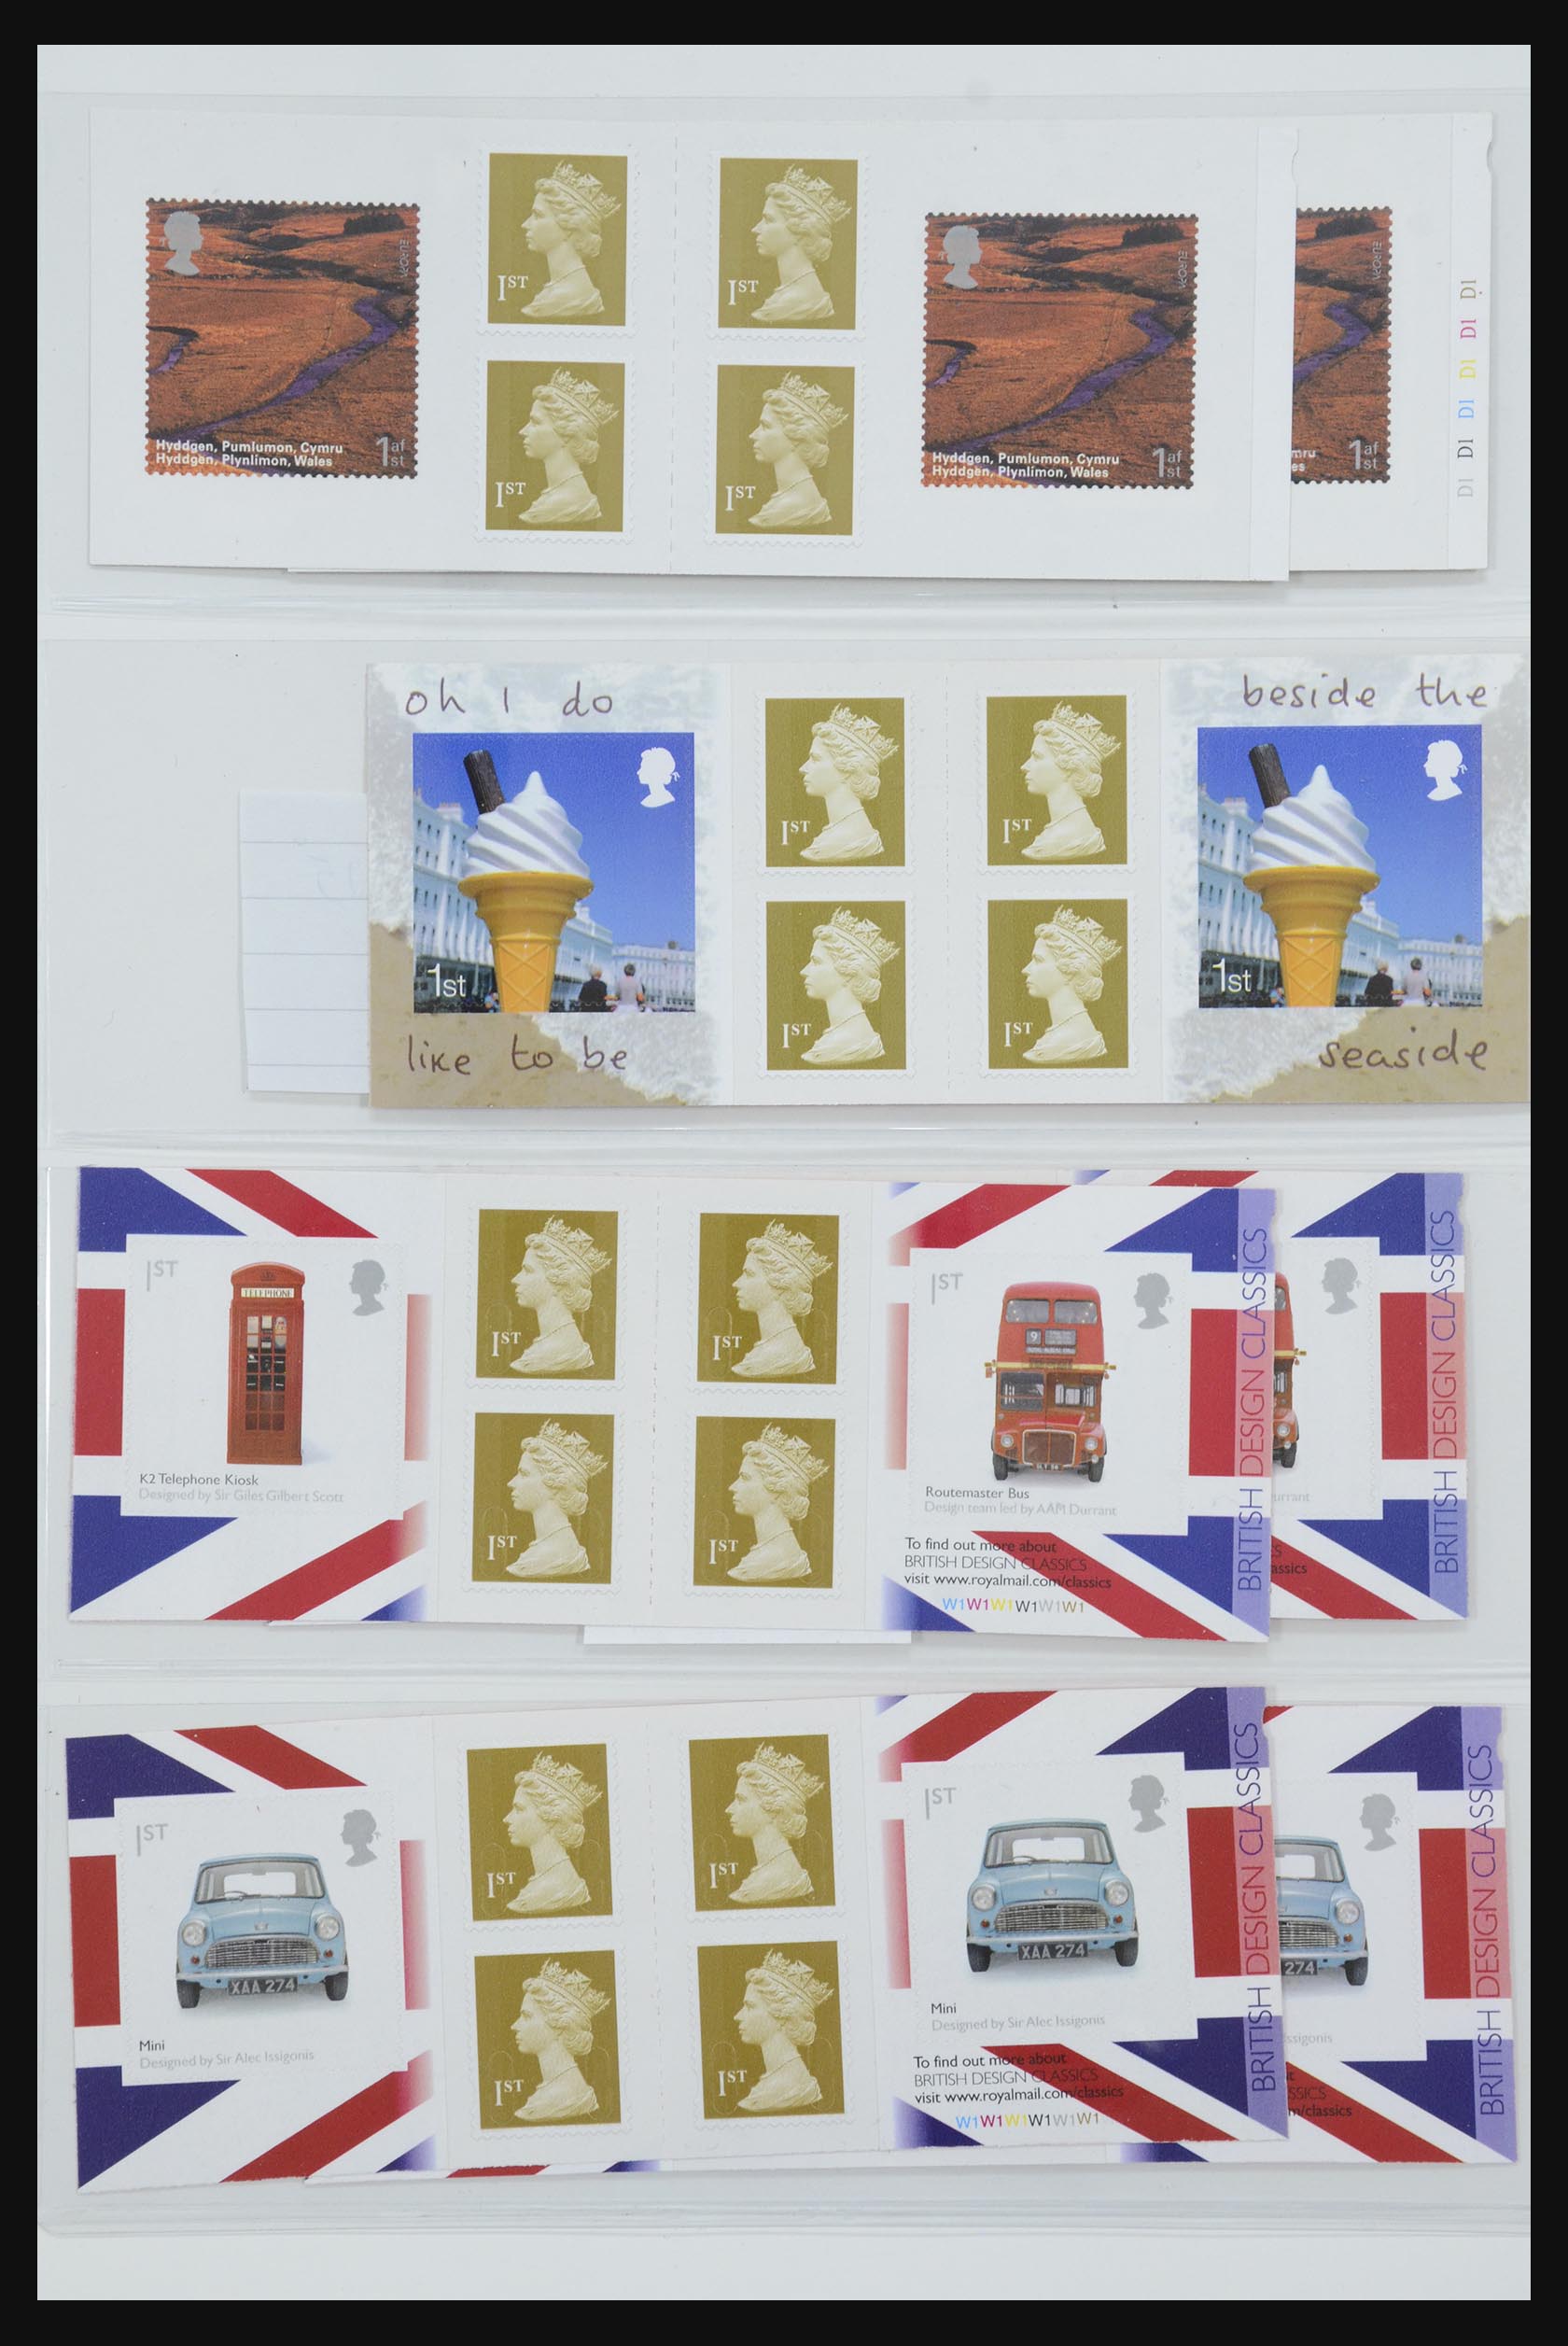 31959 376 - 31959 Great Britain stampbooklets 1987-2016!!